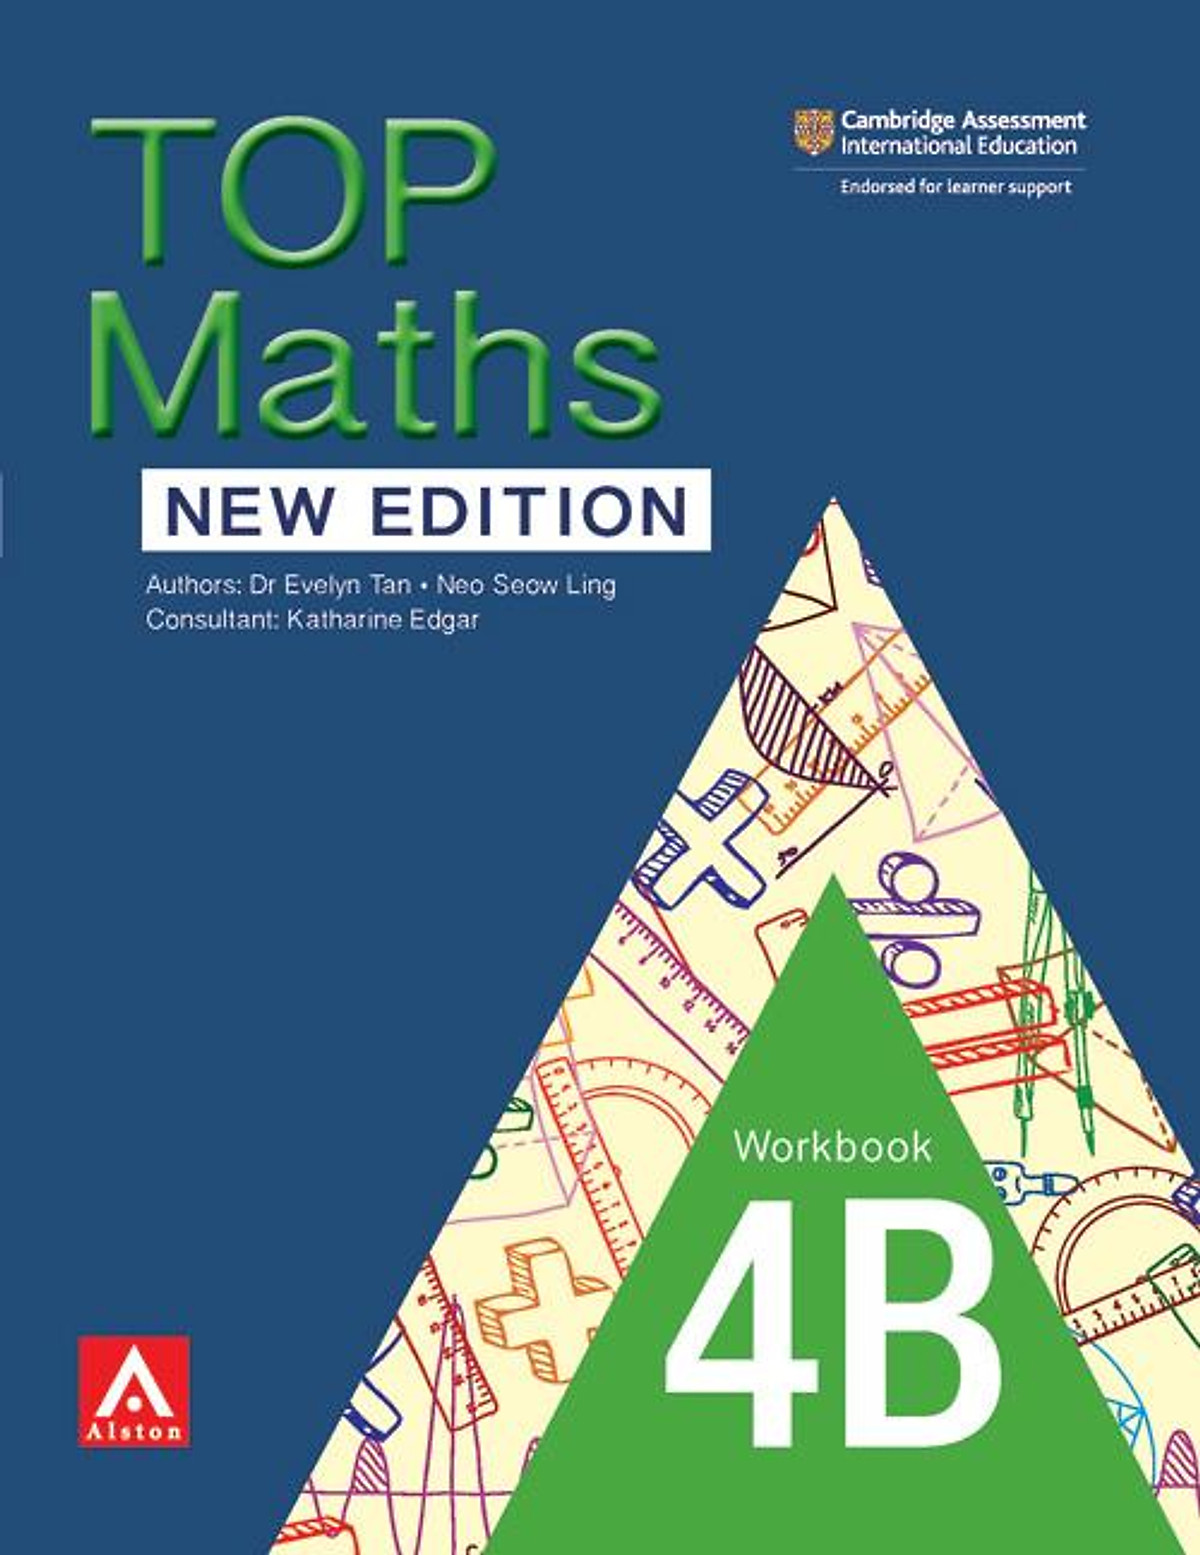 TOP Maths (New Edition) Workbook 4B